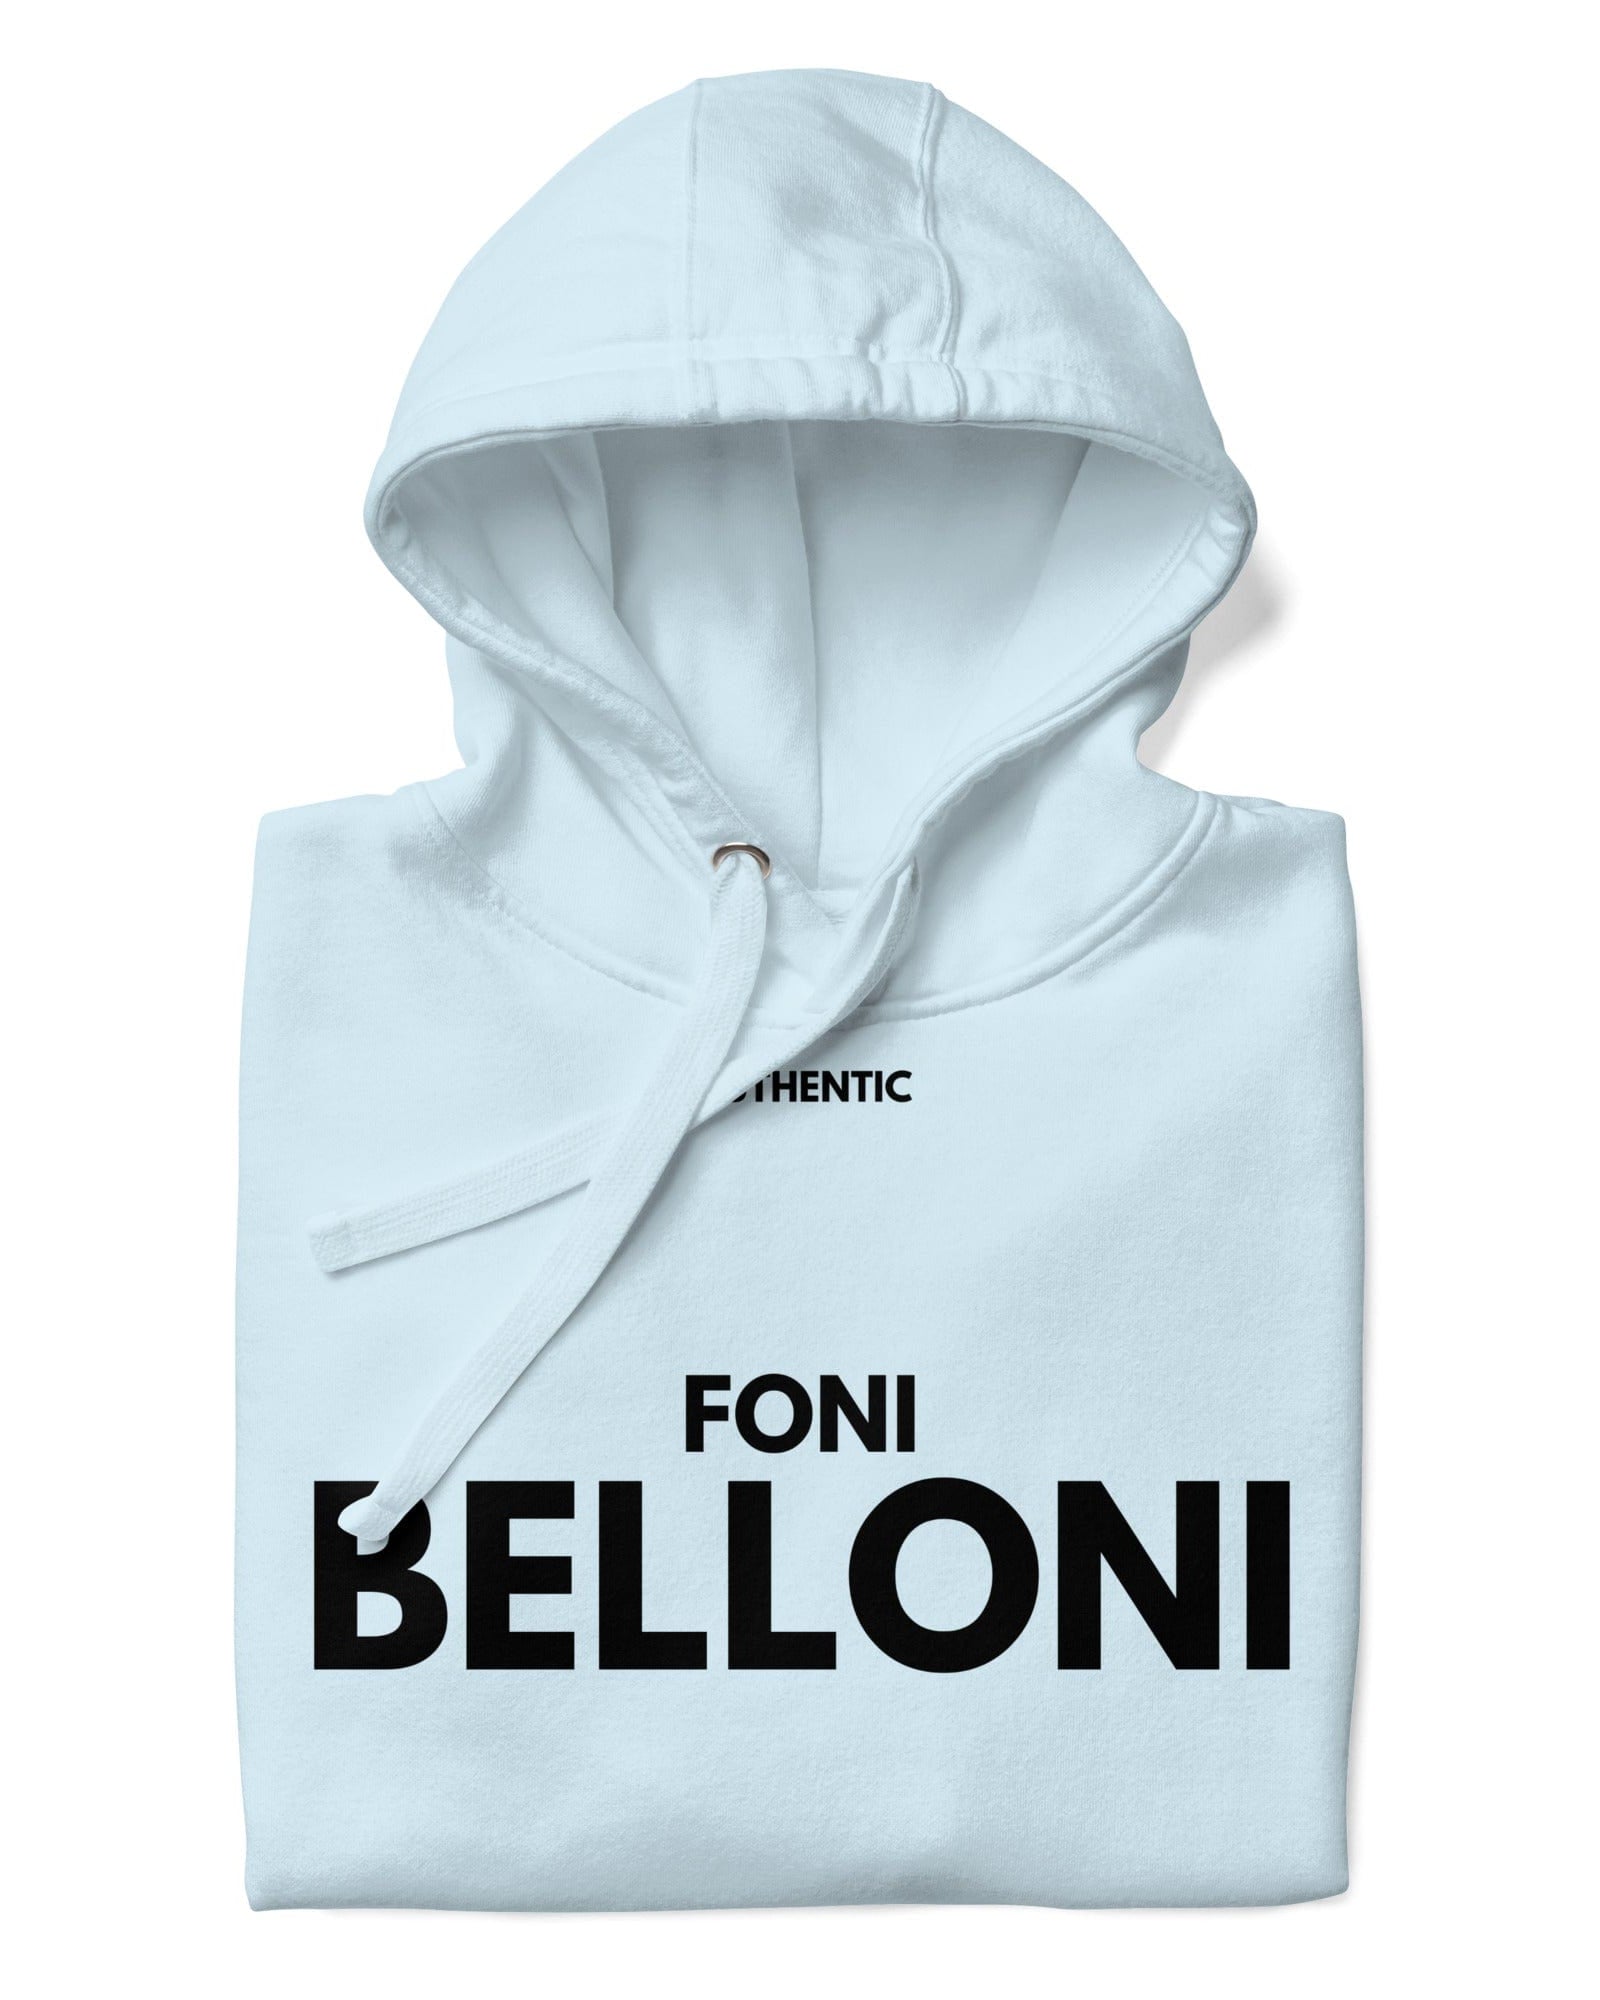 Foni Belloni Authentic Fashion Hoodie | Unisex Hoodies Jolly & Goode